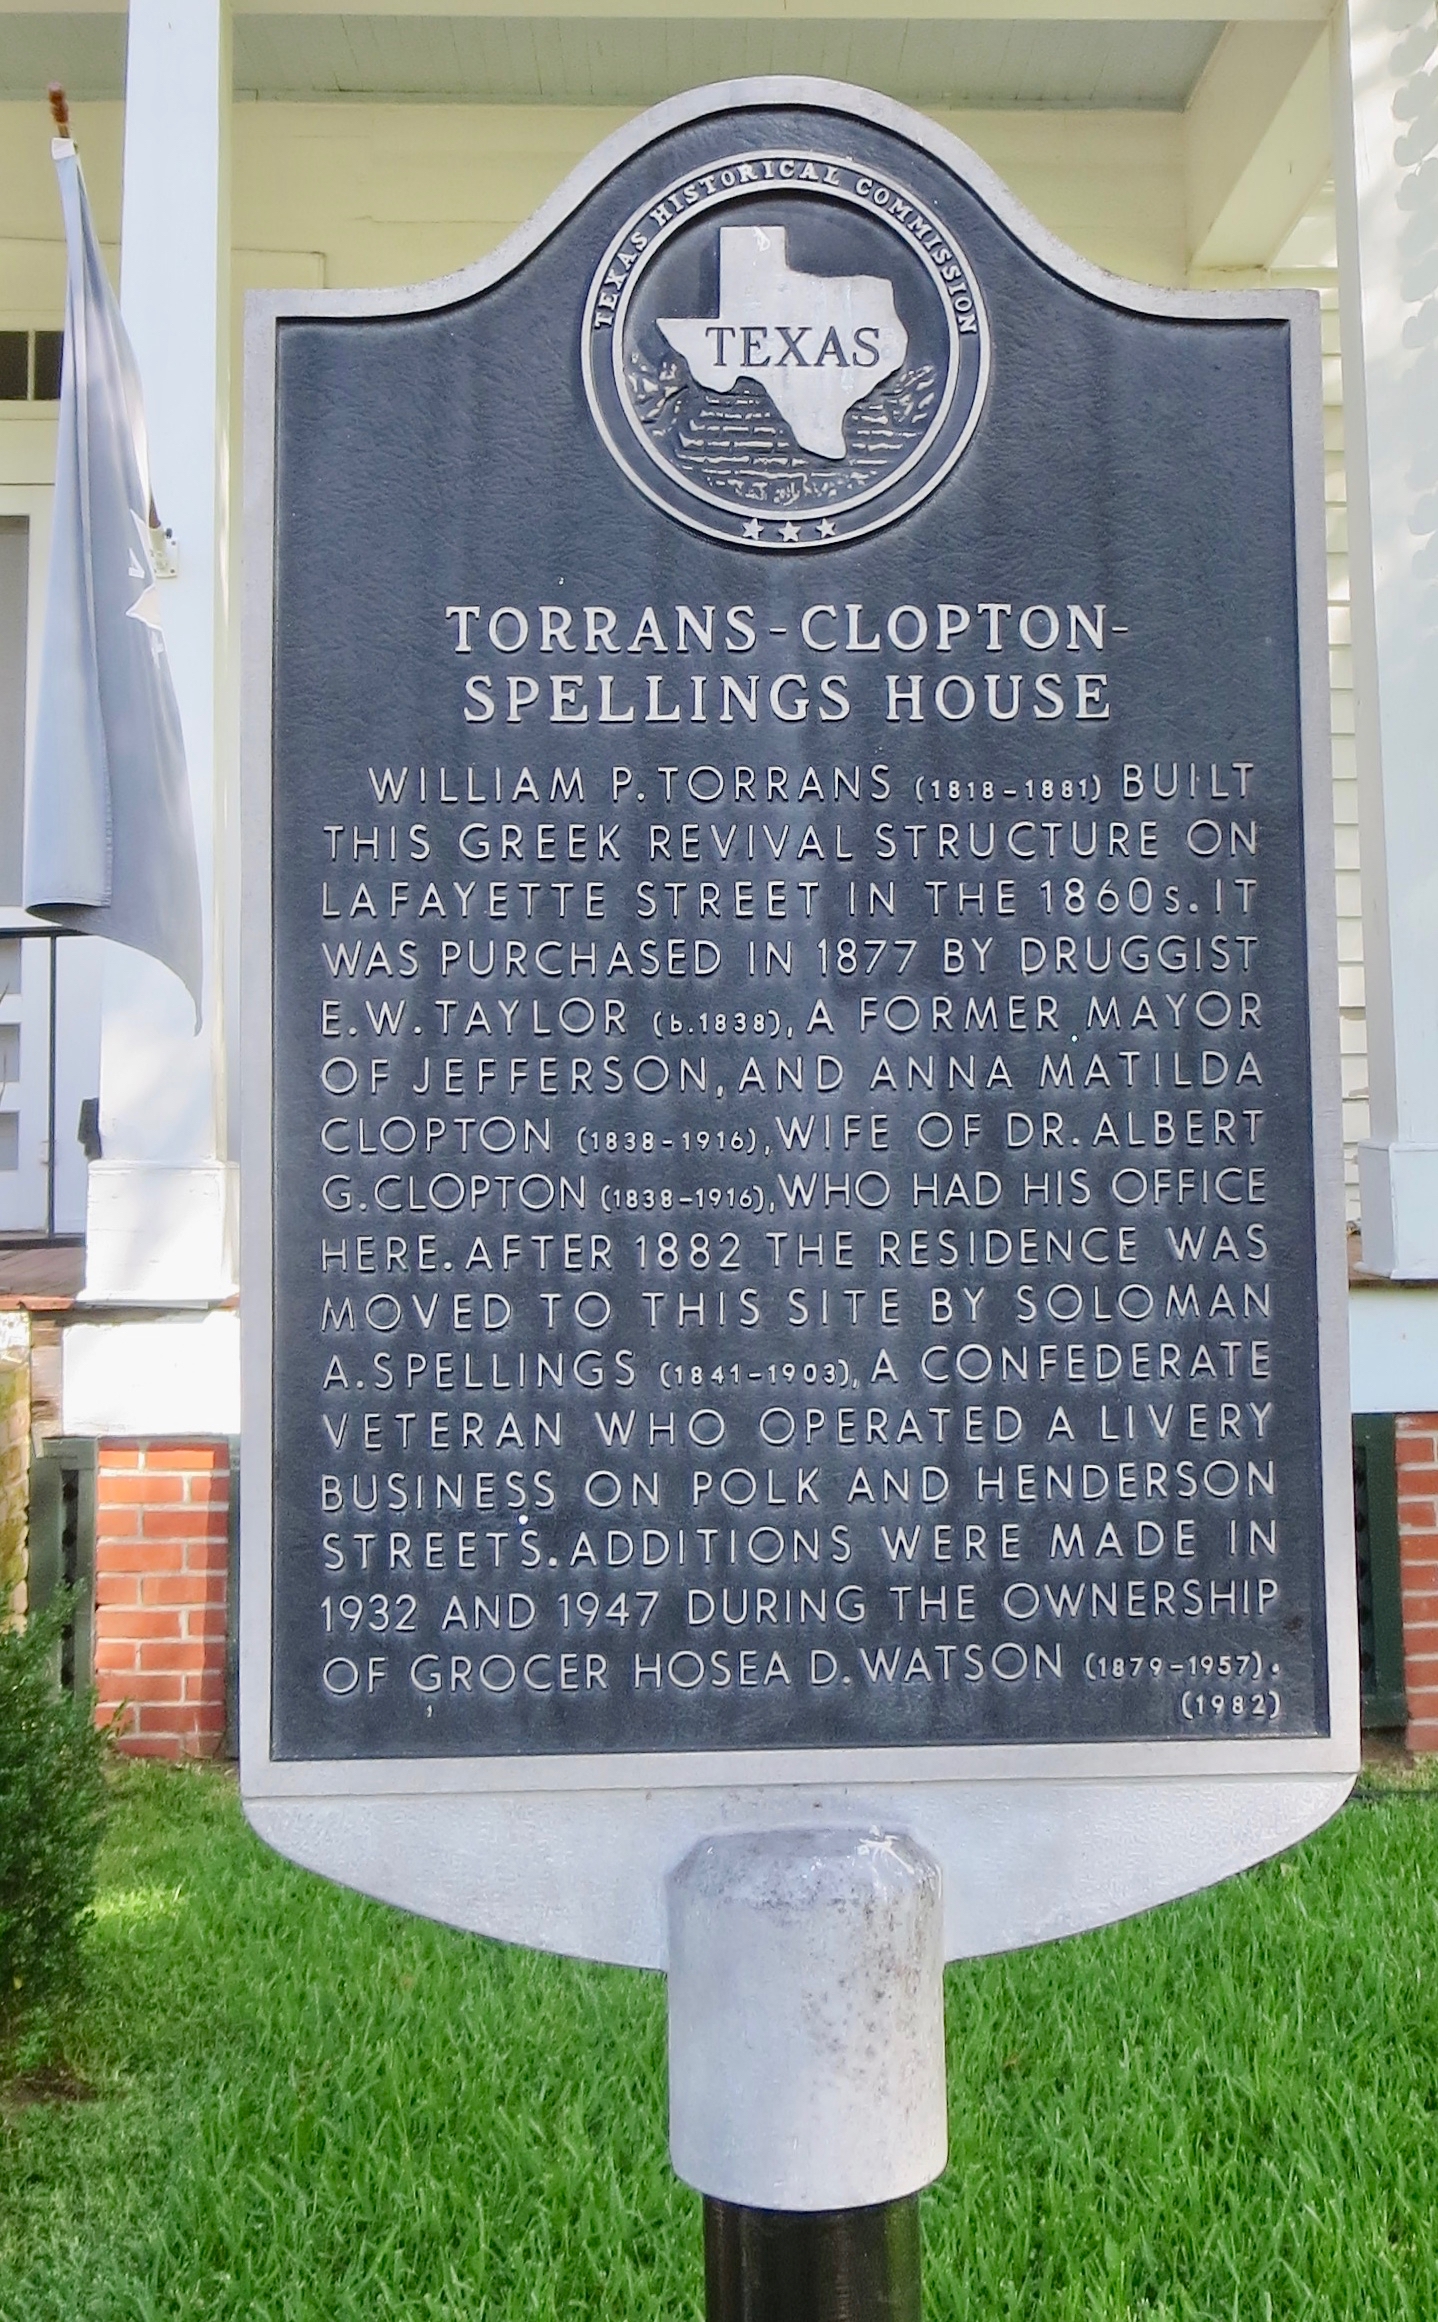 Torrans-Clopton-Spellings House Marker